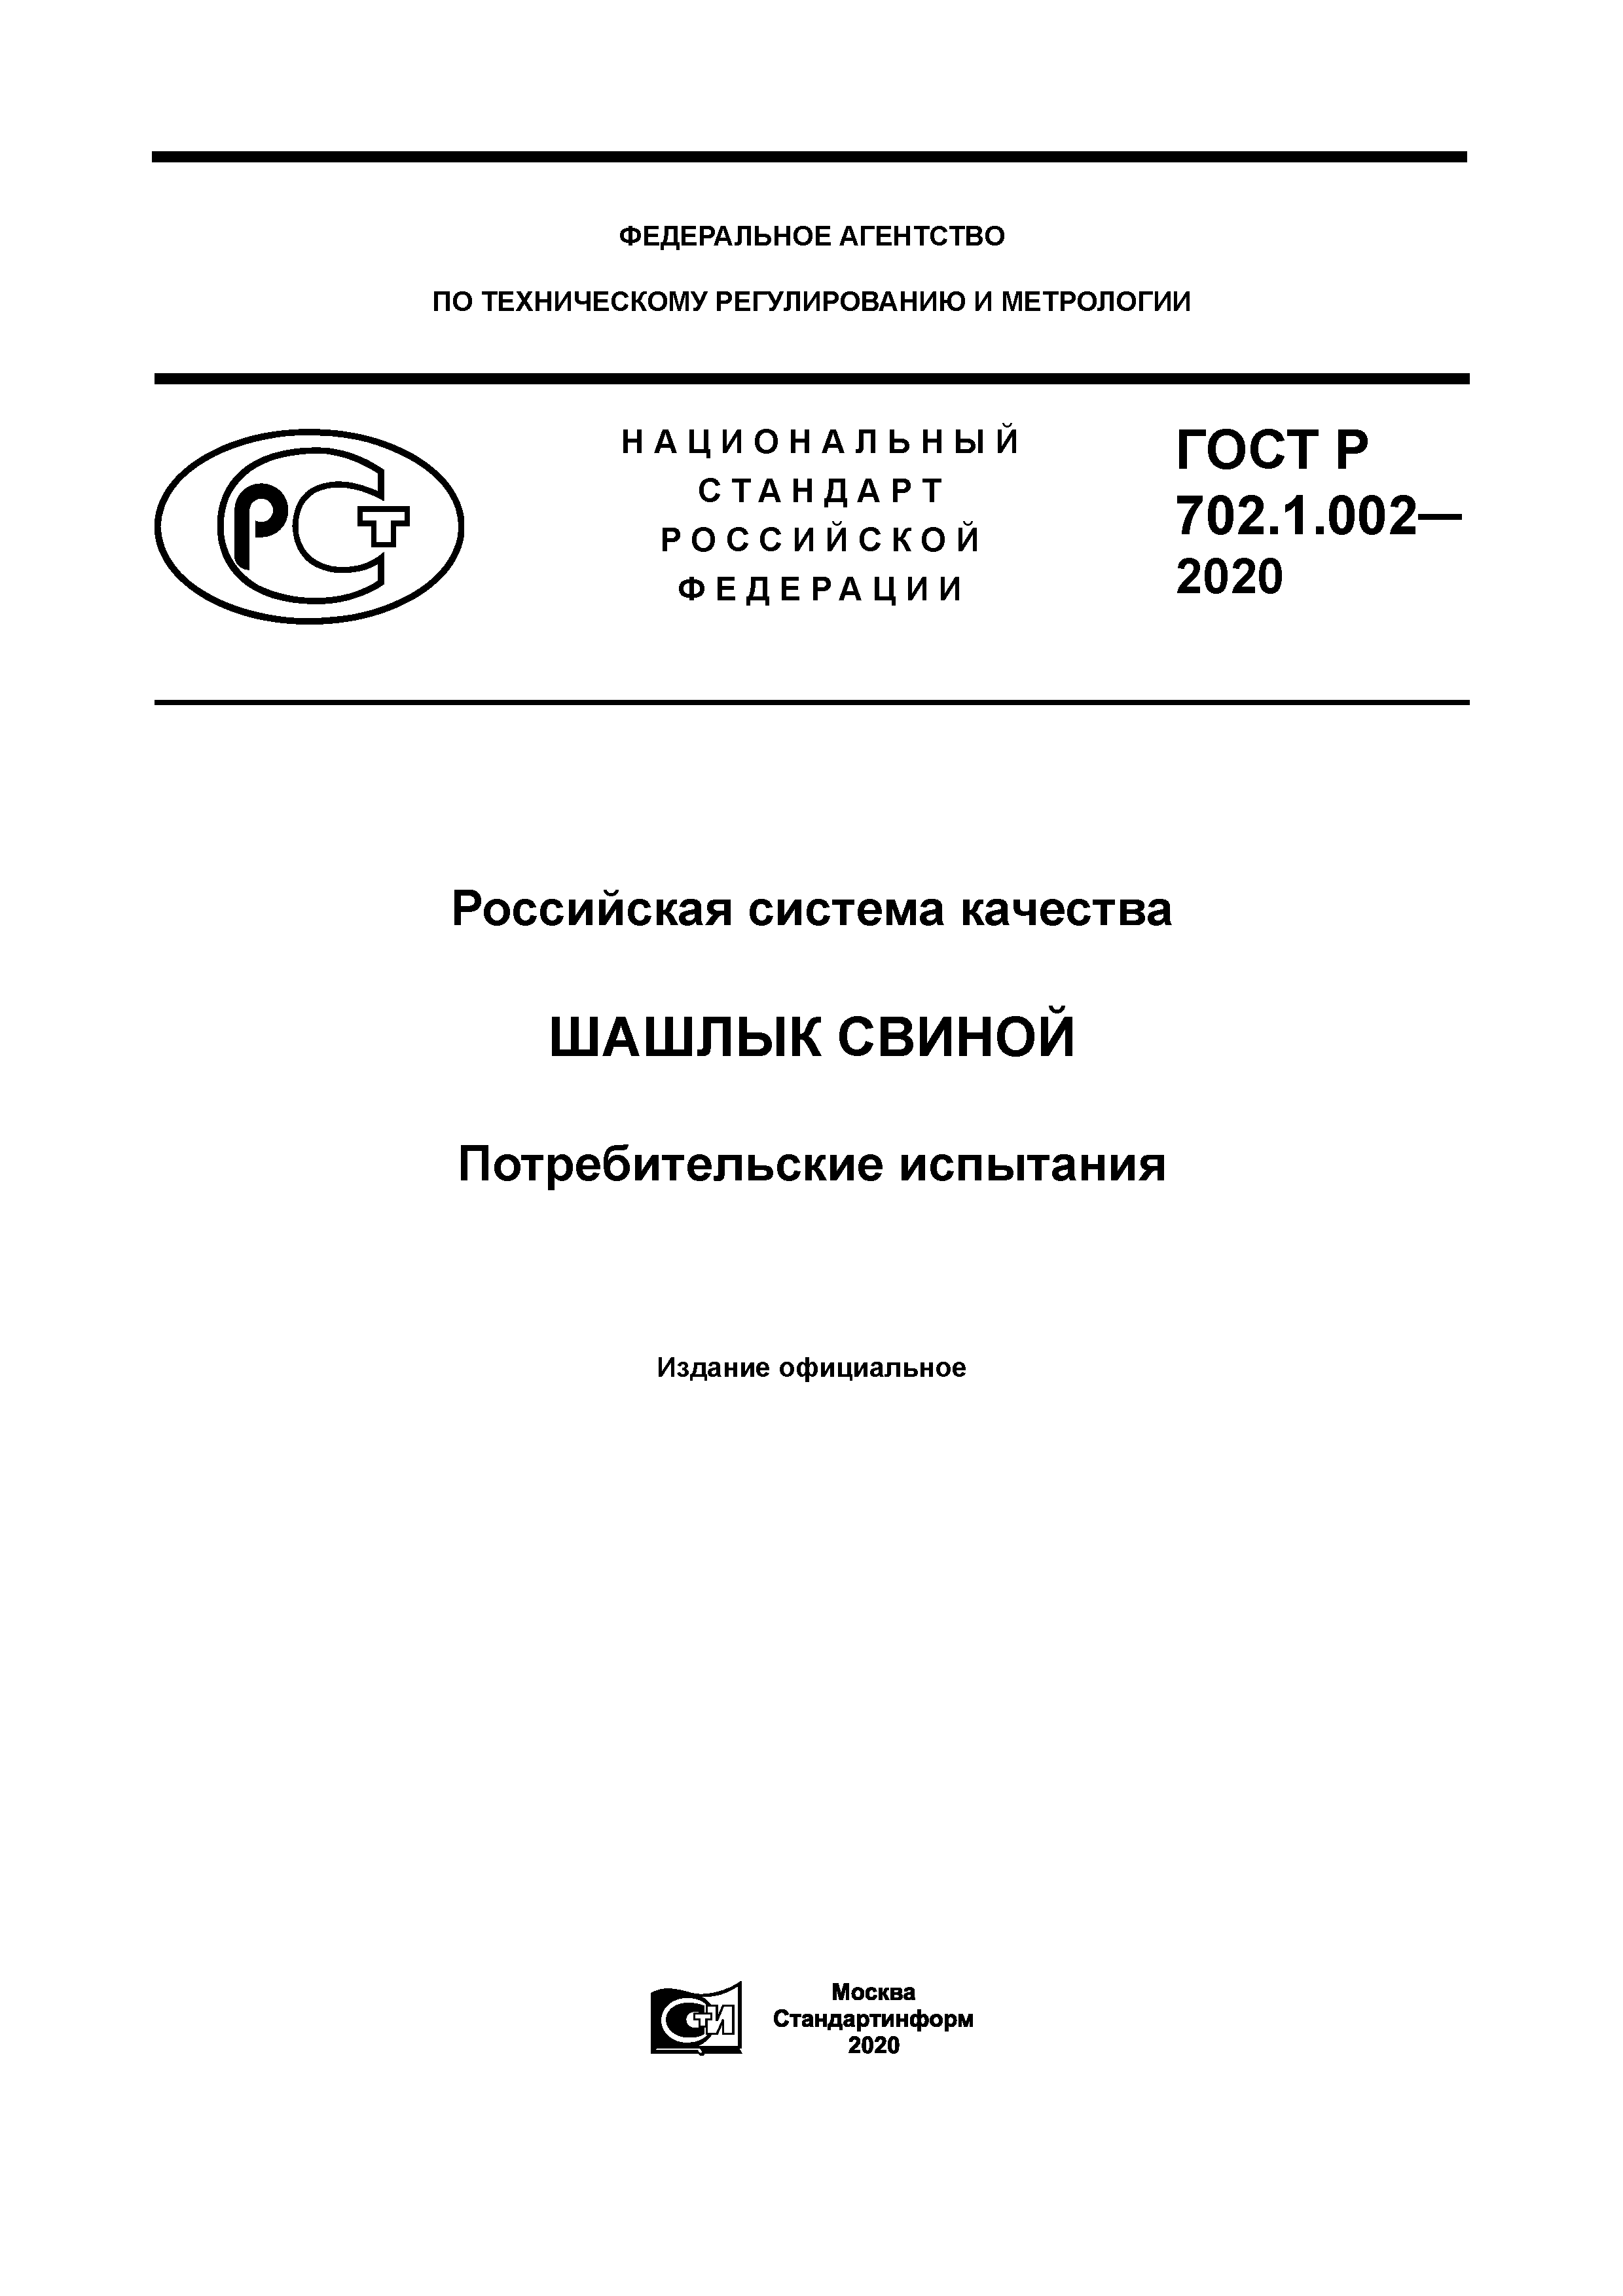 ГОСТ Р 702.1.002-2020